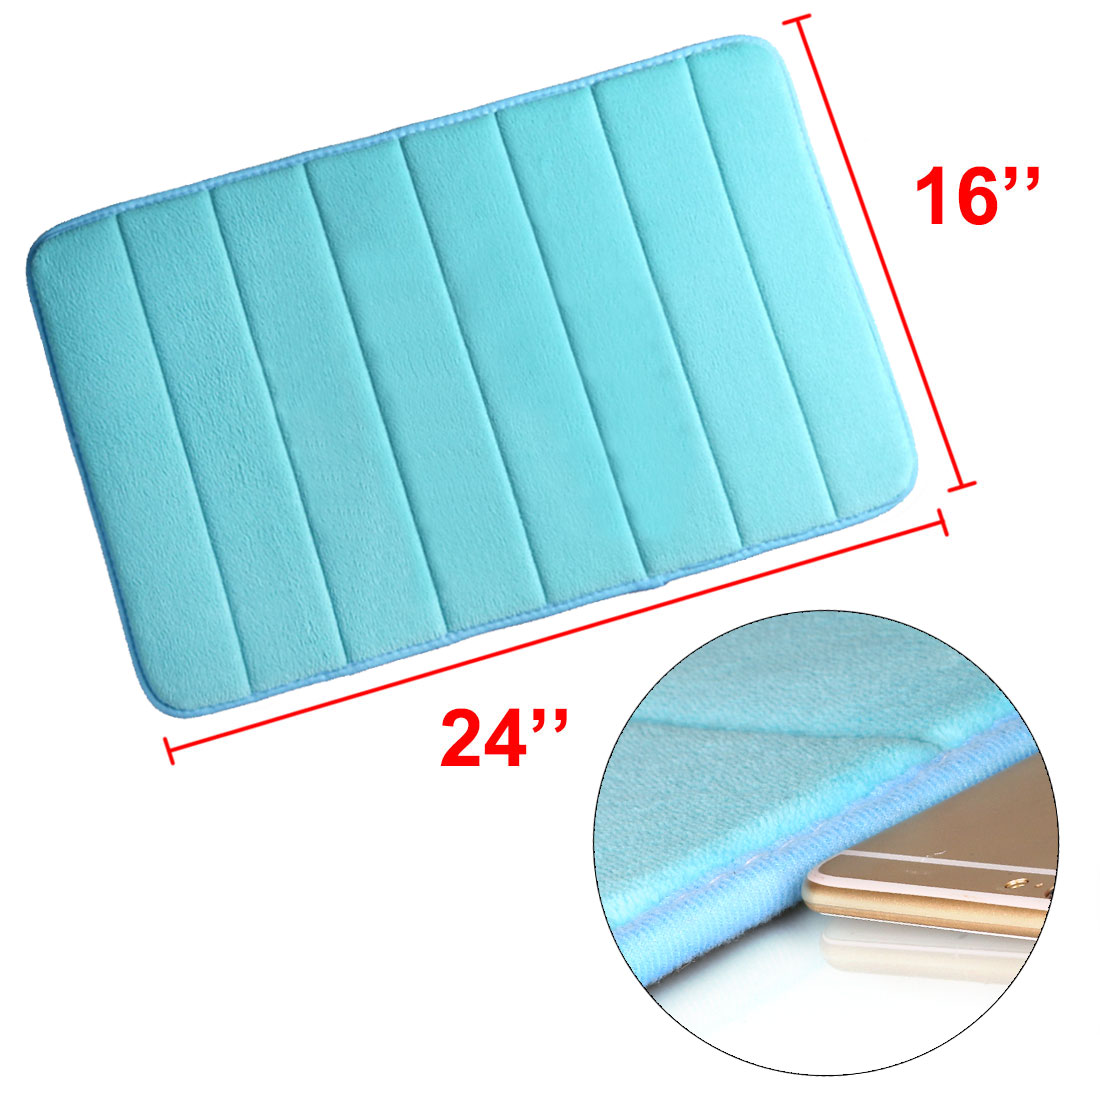 Unique Bargains Bathroom Rugs Non-slip Soft Absorbent Rebound Memory Foam Bath Mats 24 X 16 Inch Blue